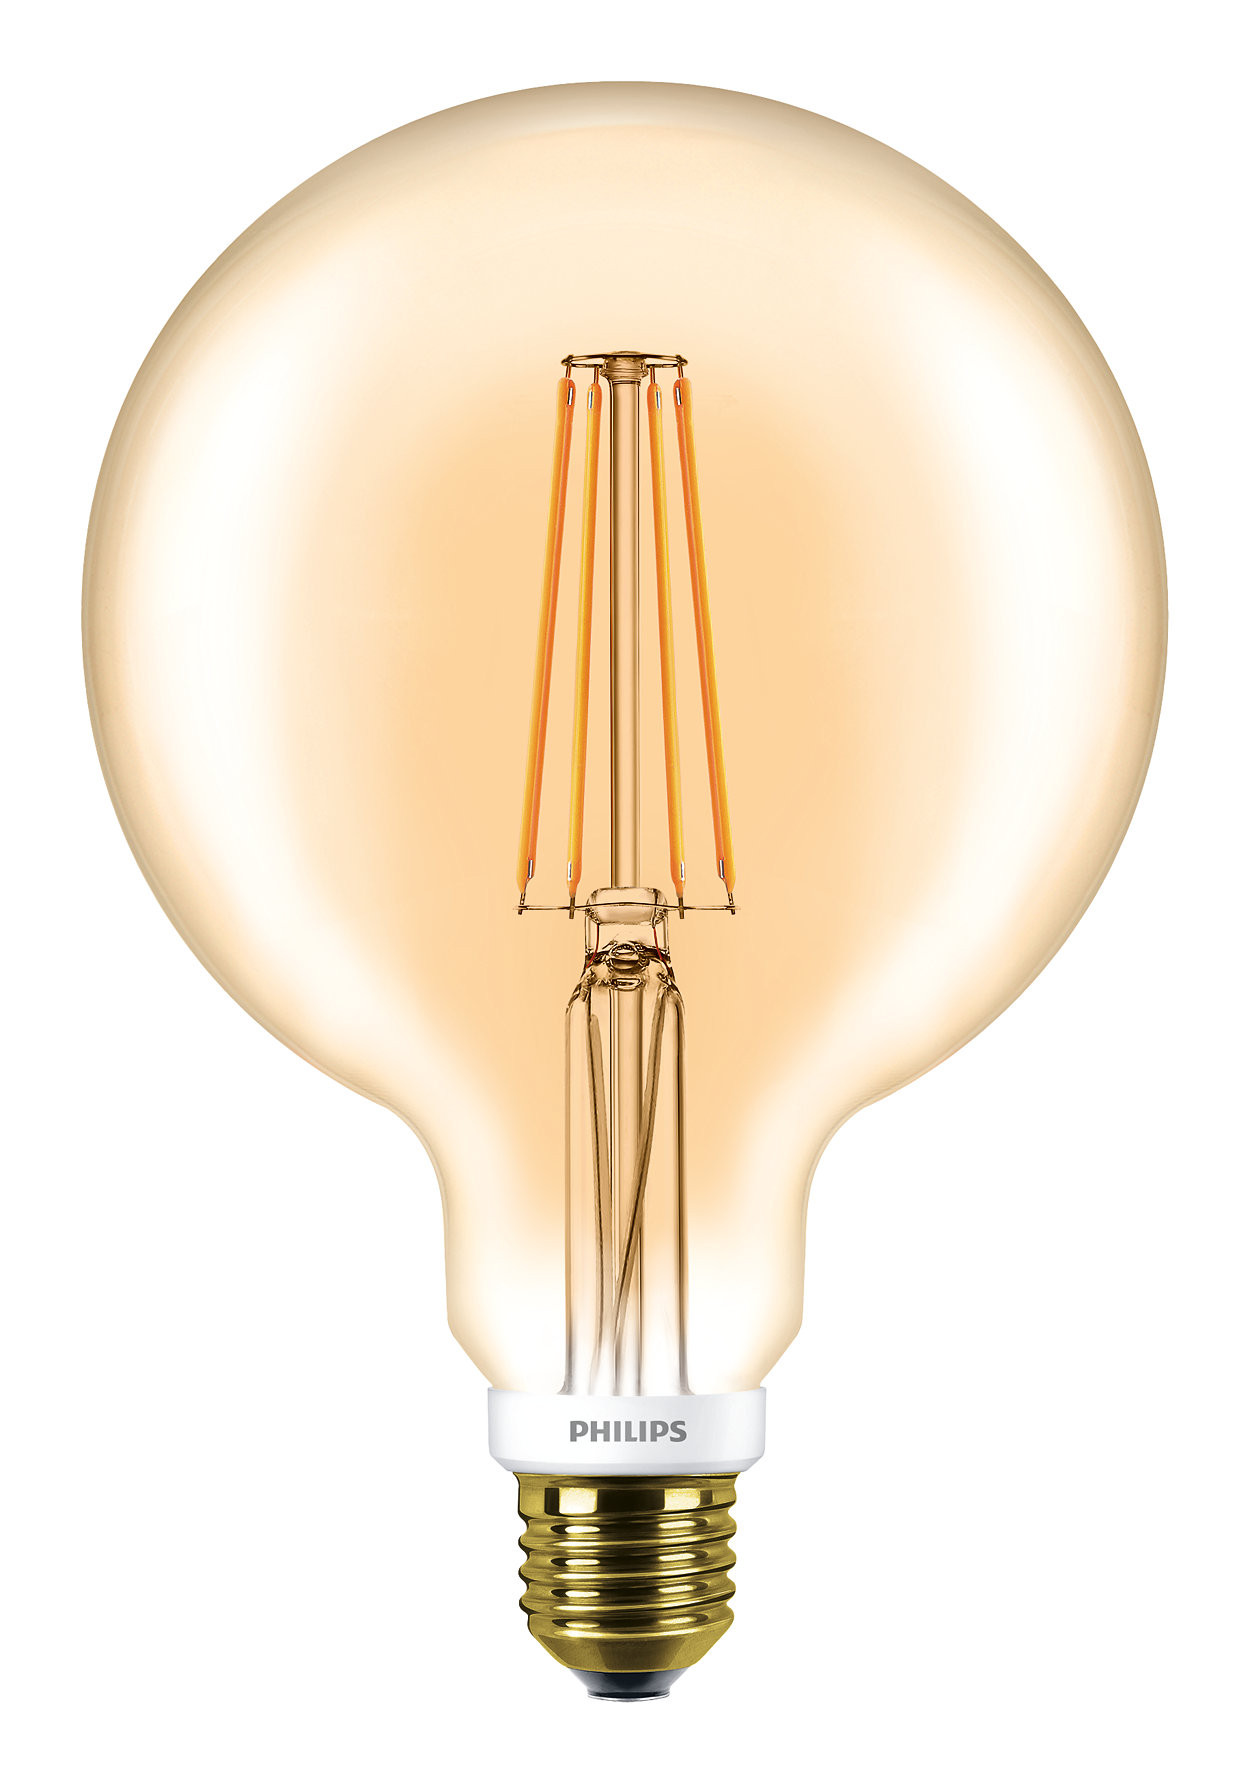 Philips Filament Classic LEDglobe D 7-50W G120 E27 820 GOLD